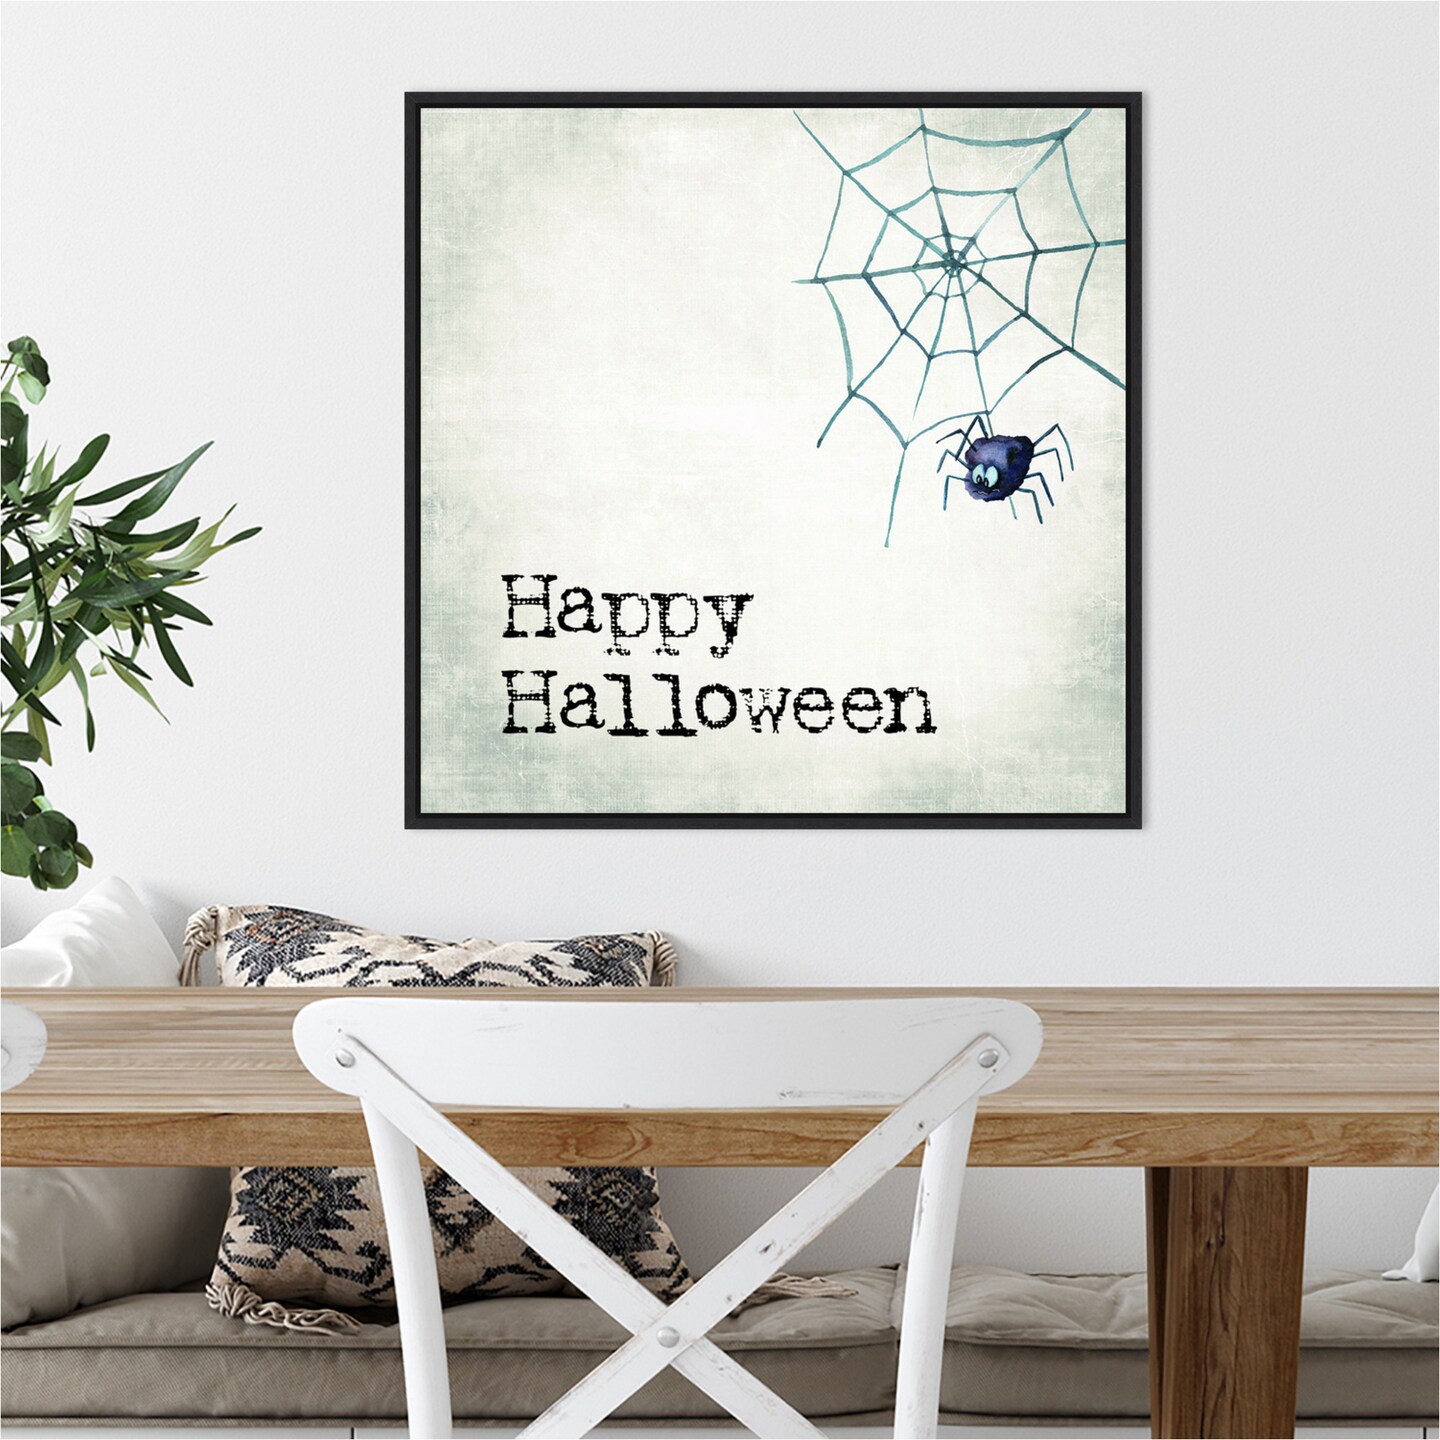 Happy Halloween Spider by Amanti Art Portfolio 22-in. W x 22-in. H. Canvas Wall Art Print Framed in Black